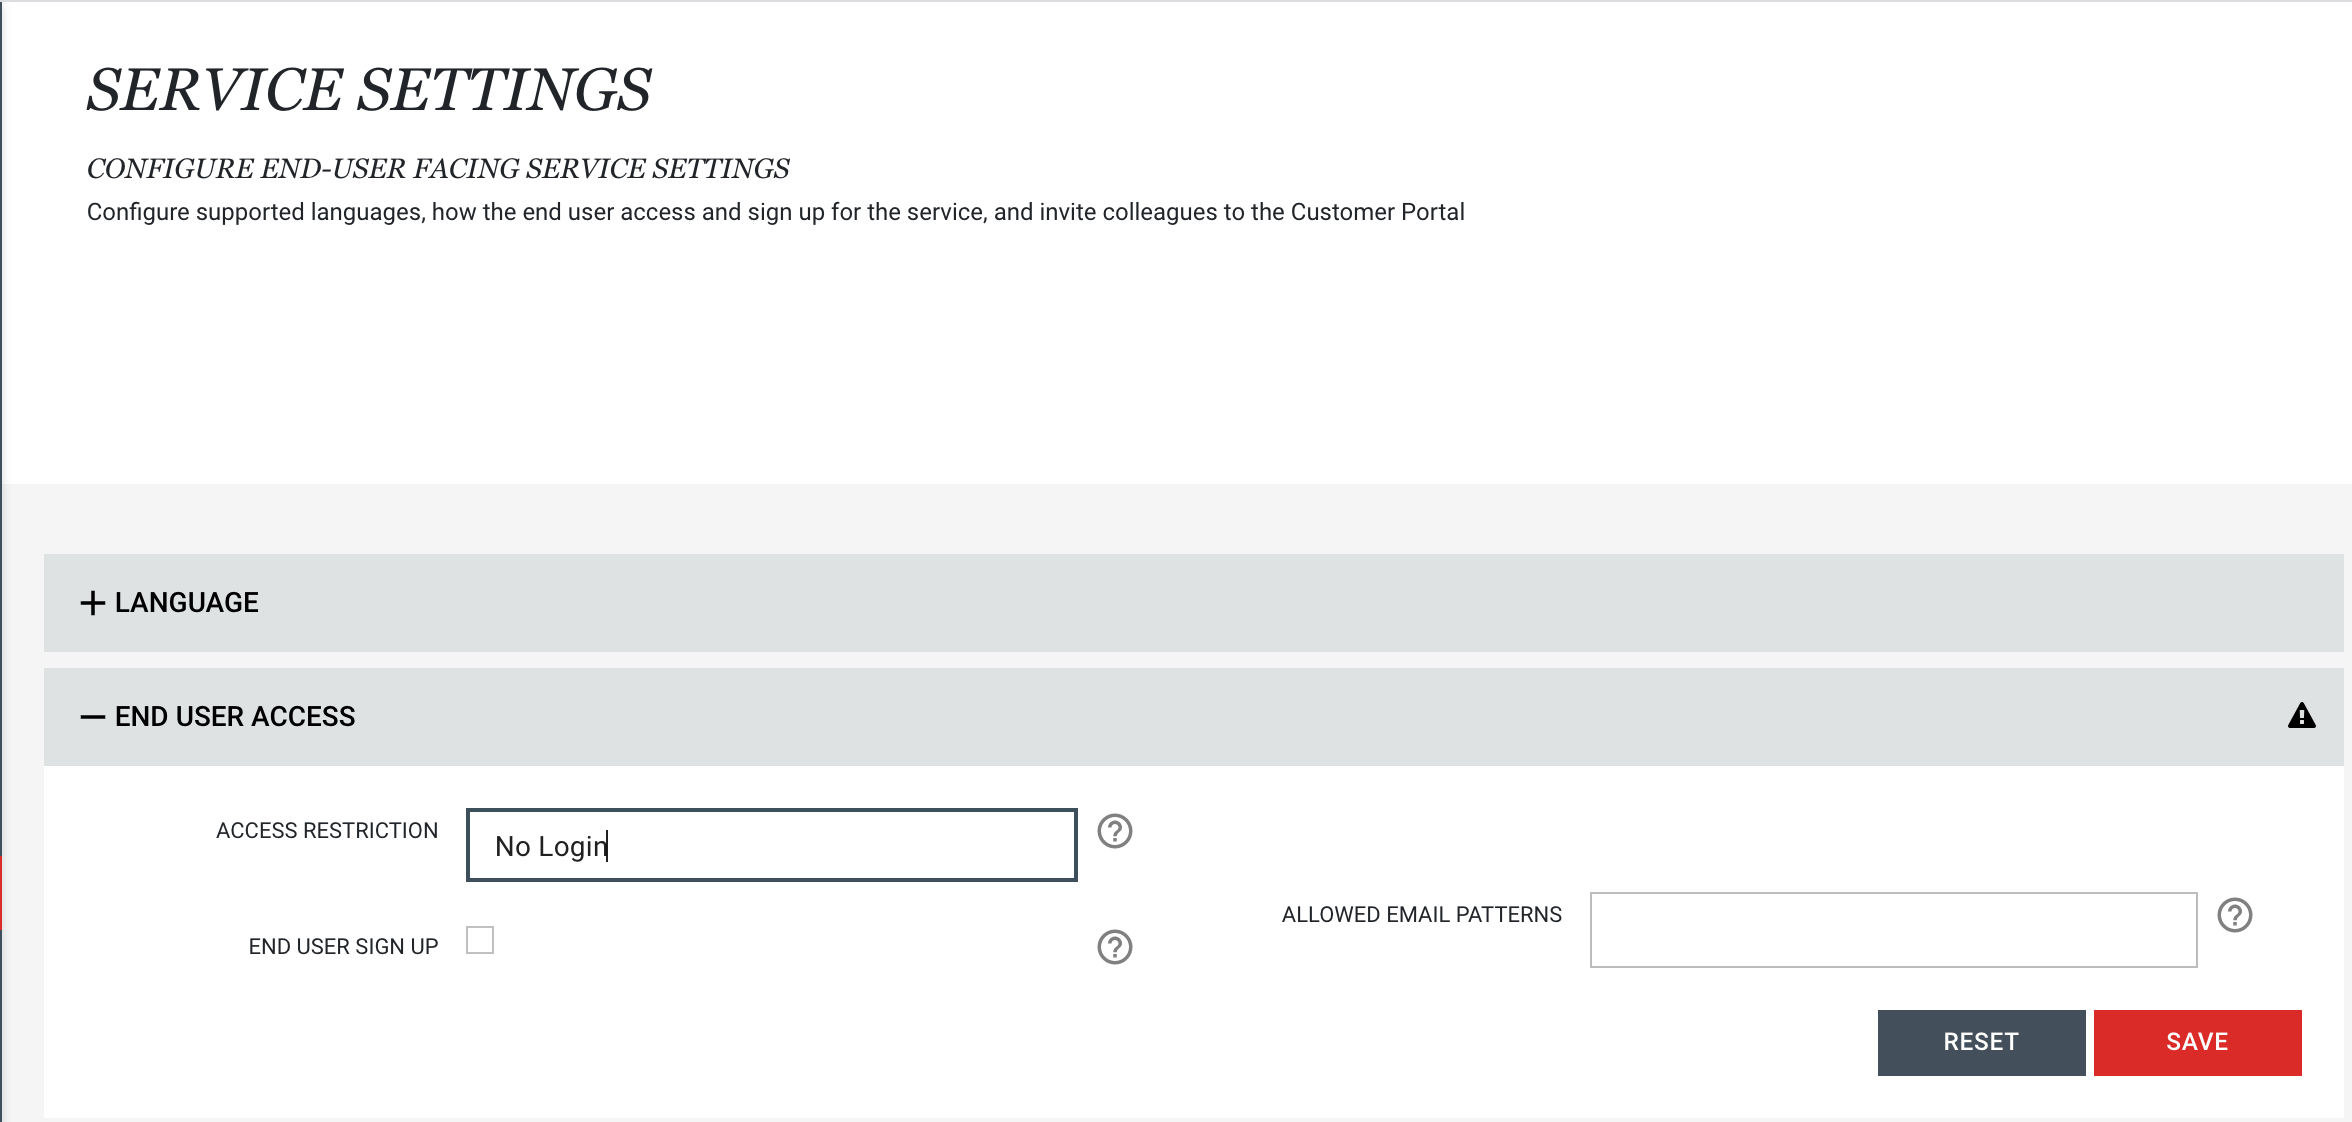 Customer Portal End User Access - No Login